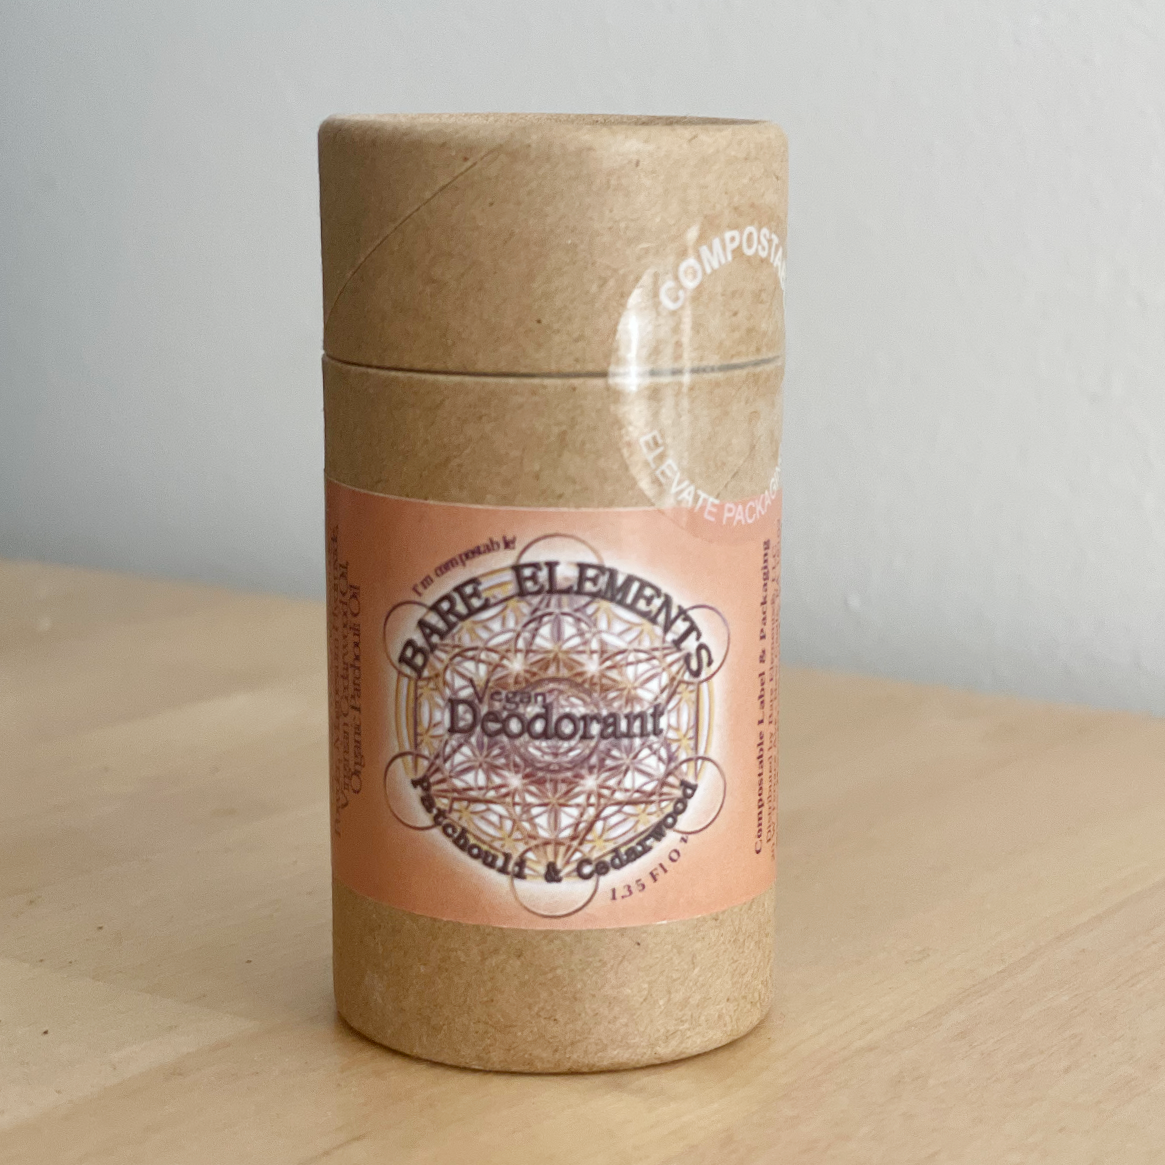 Patchouli & Cedarwood All Natural Vegan Deodorant in Paper Tube - Baking Soda Free